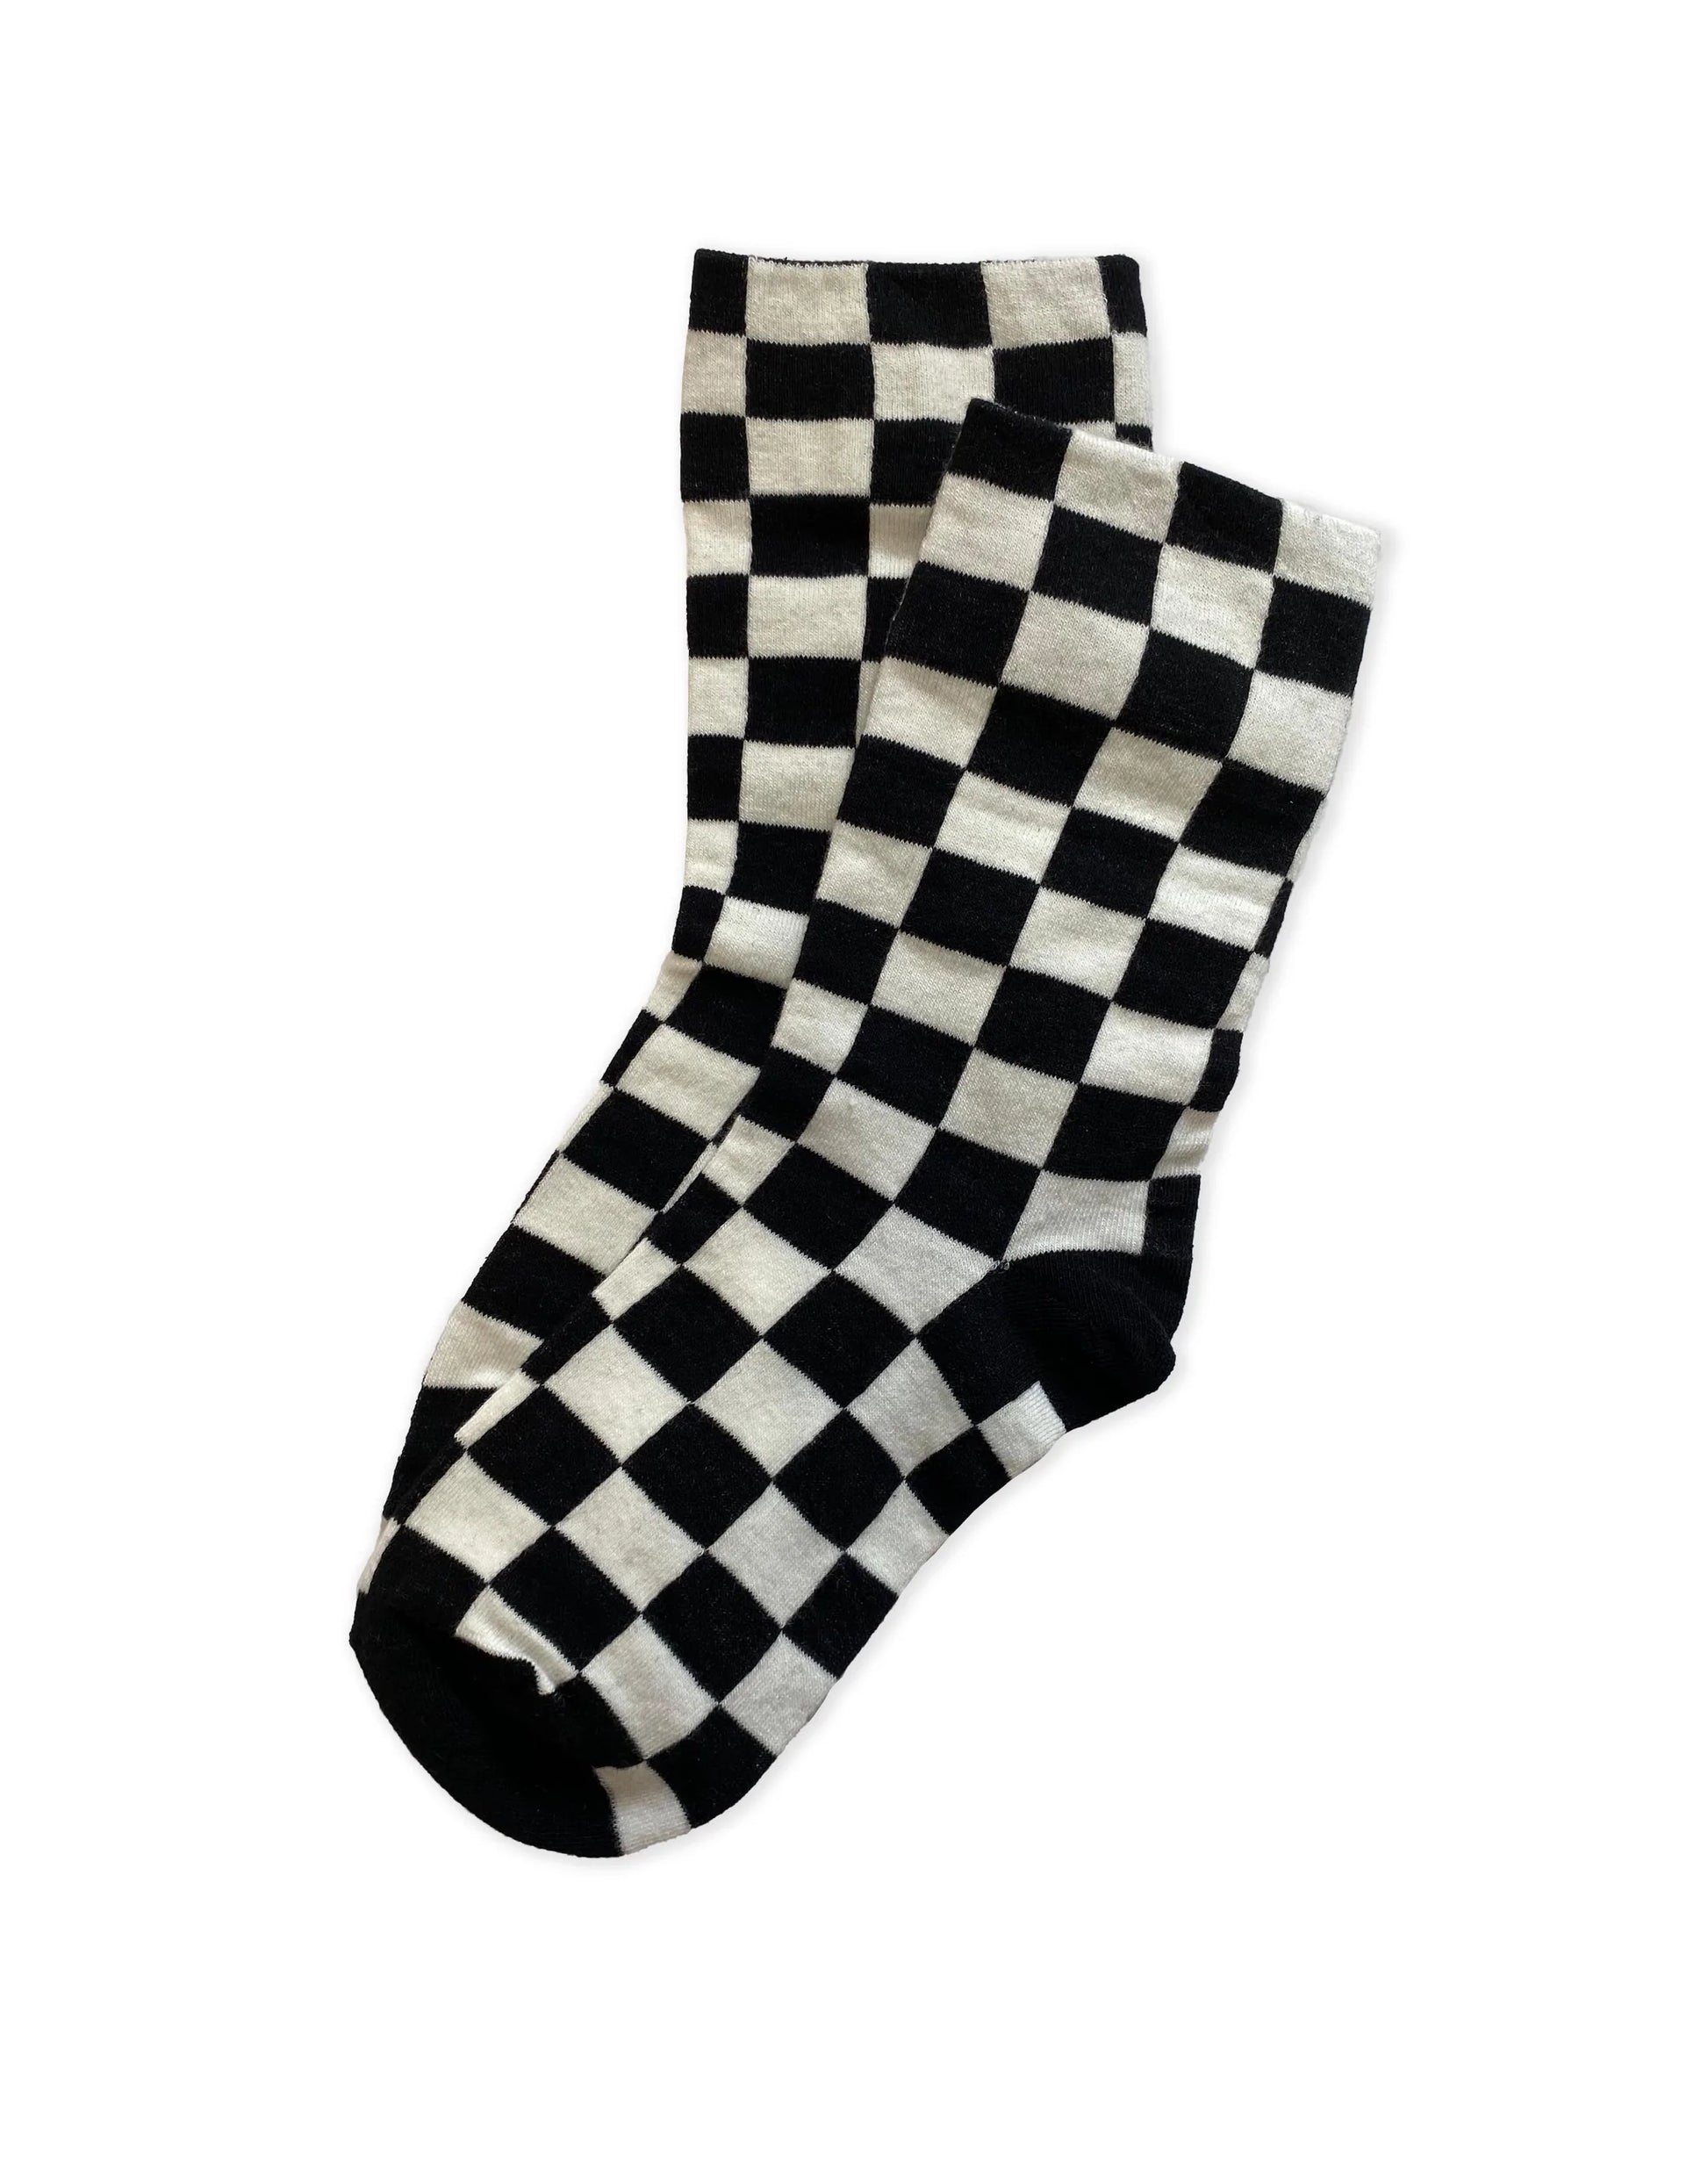 Pamela Mann Checkerboard Socks - Black and white chess board pattern cotton crew length ankle sock.